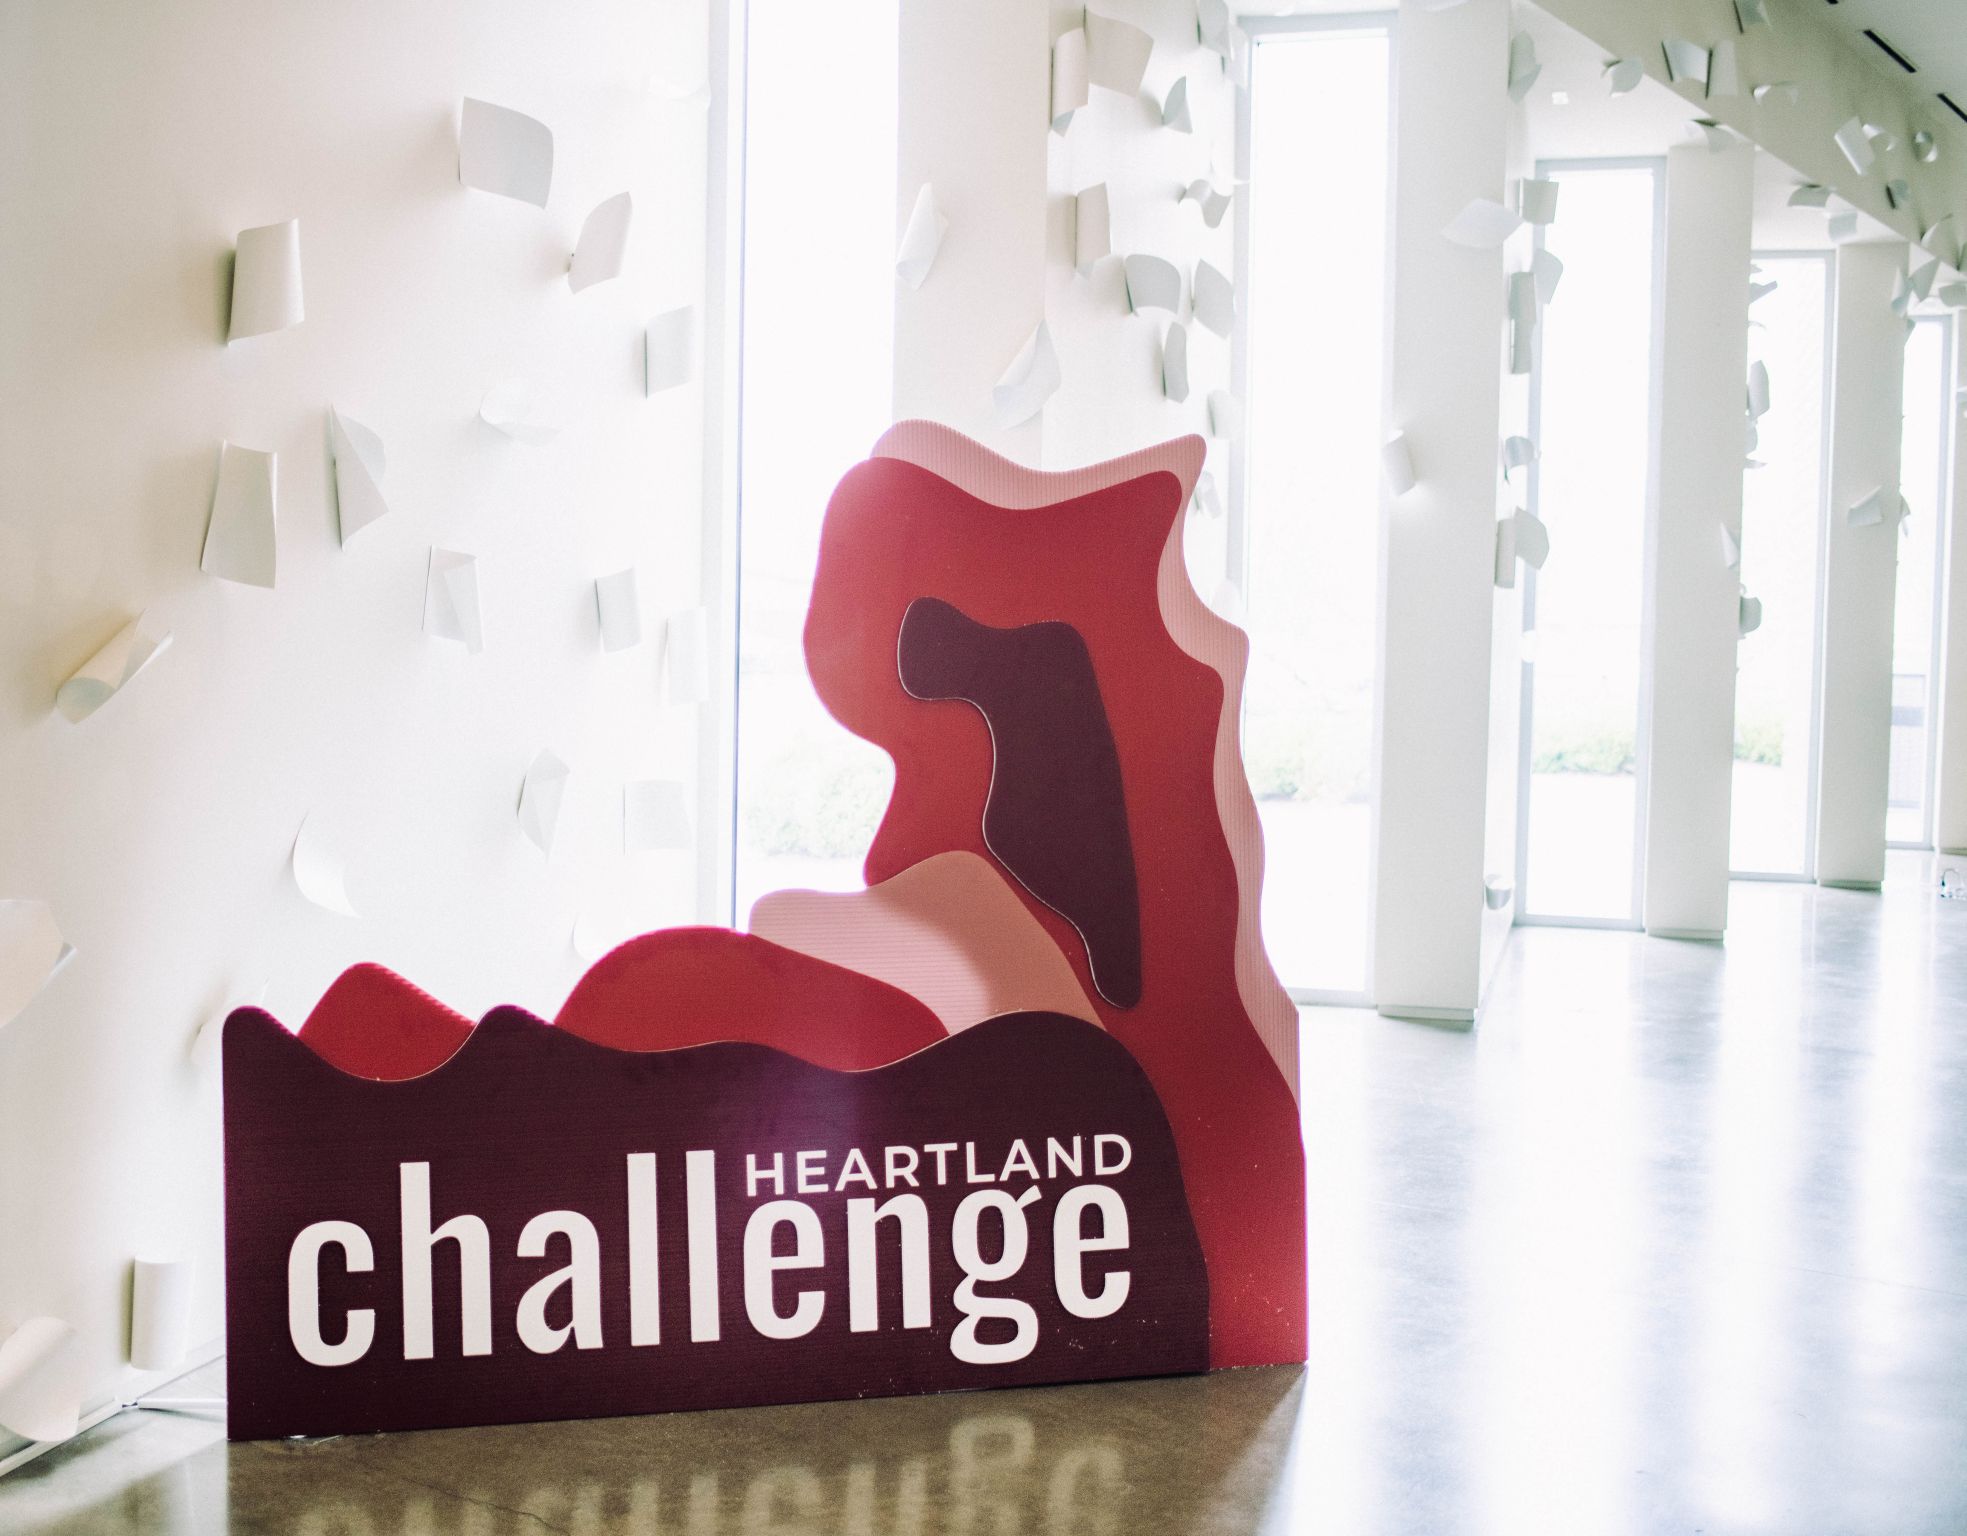 Heartland challenge display